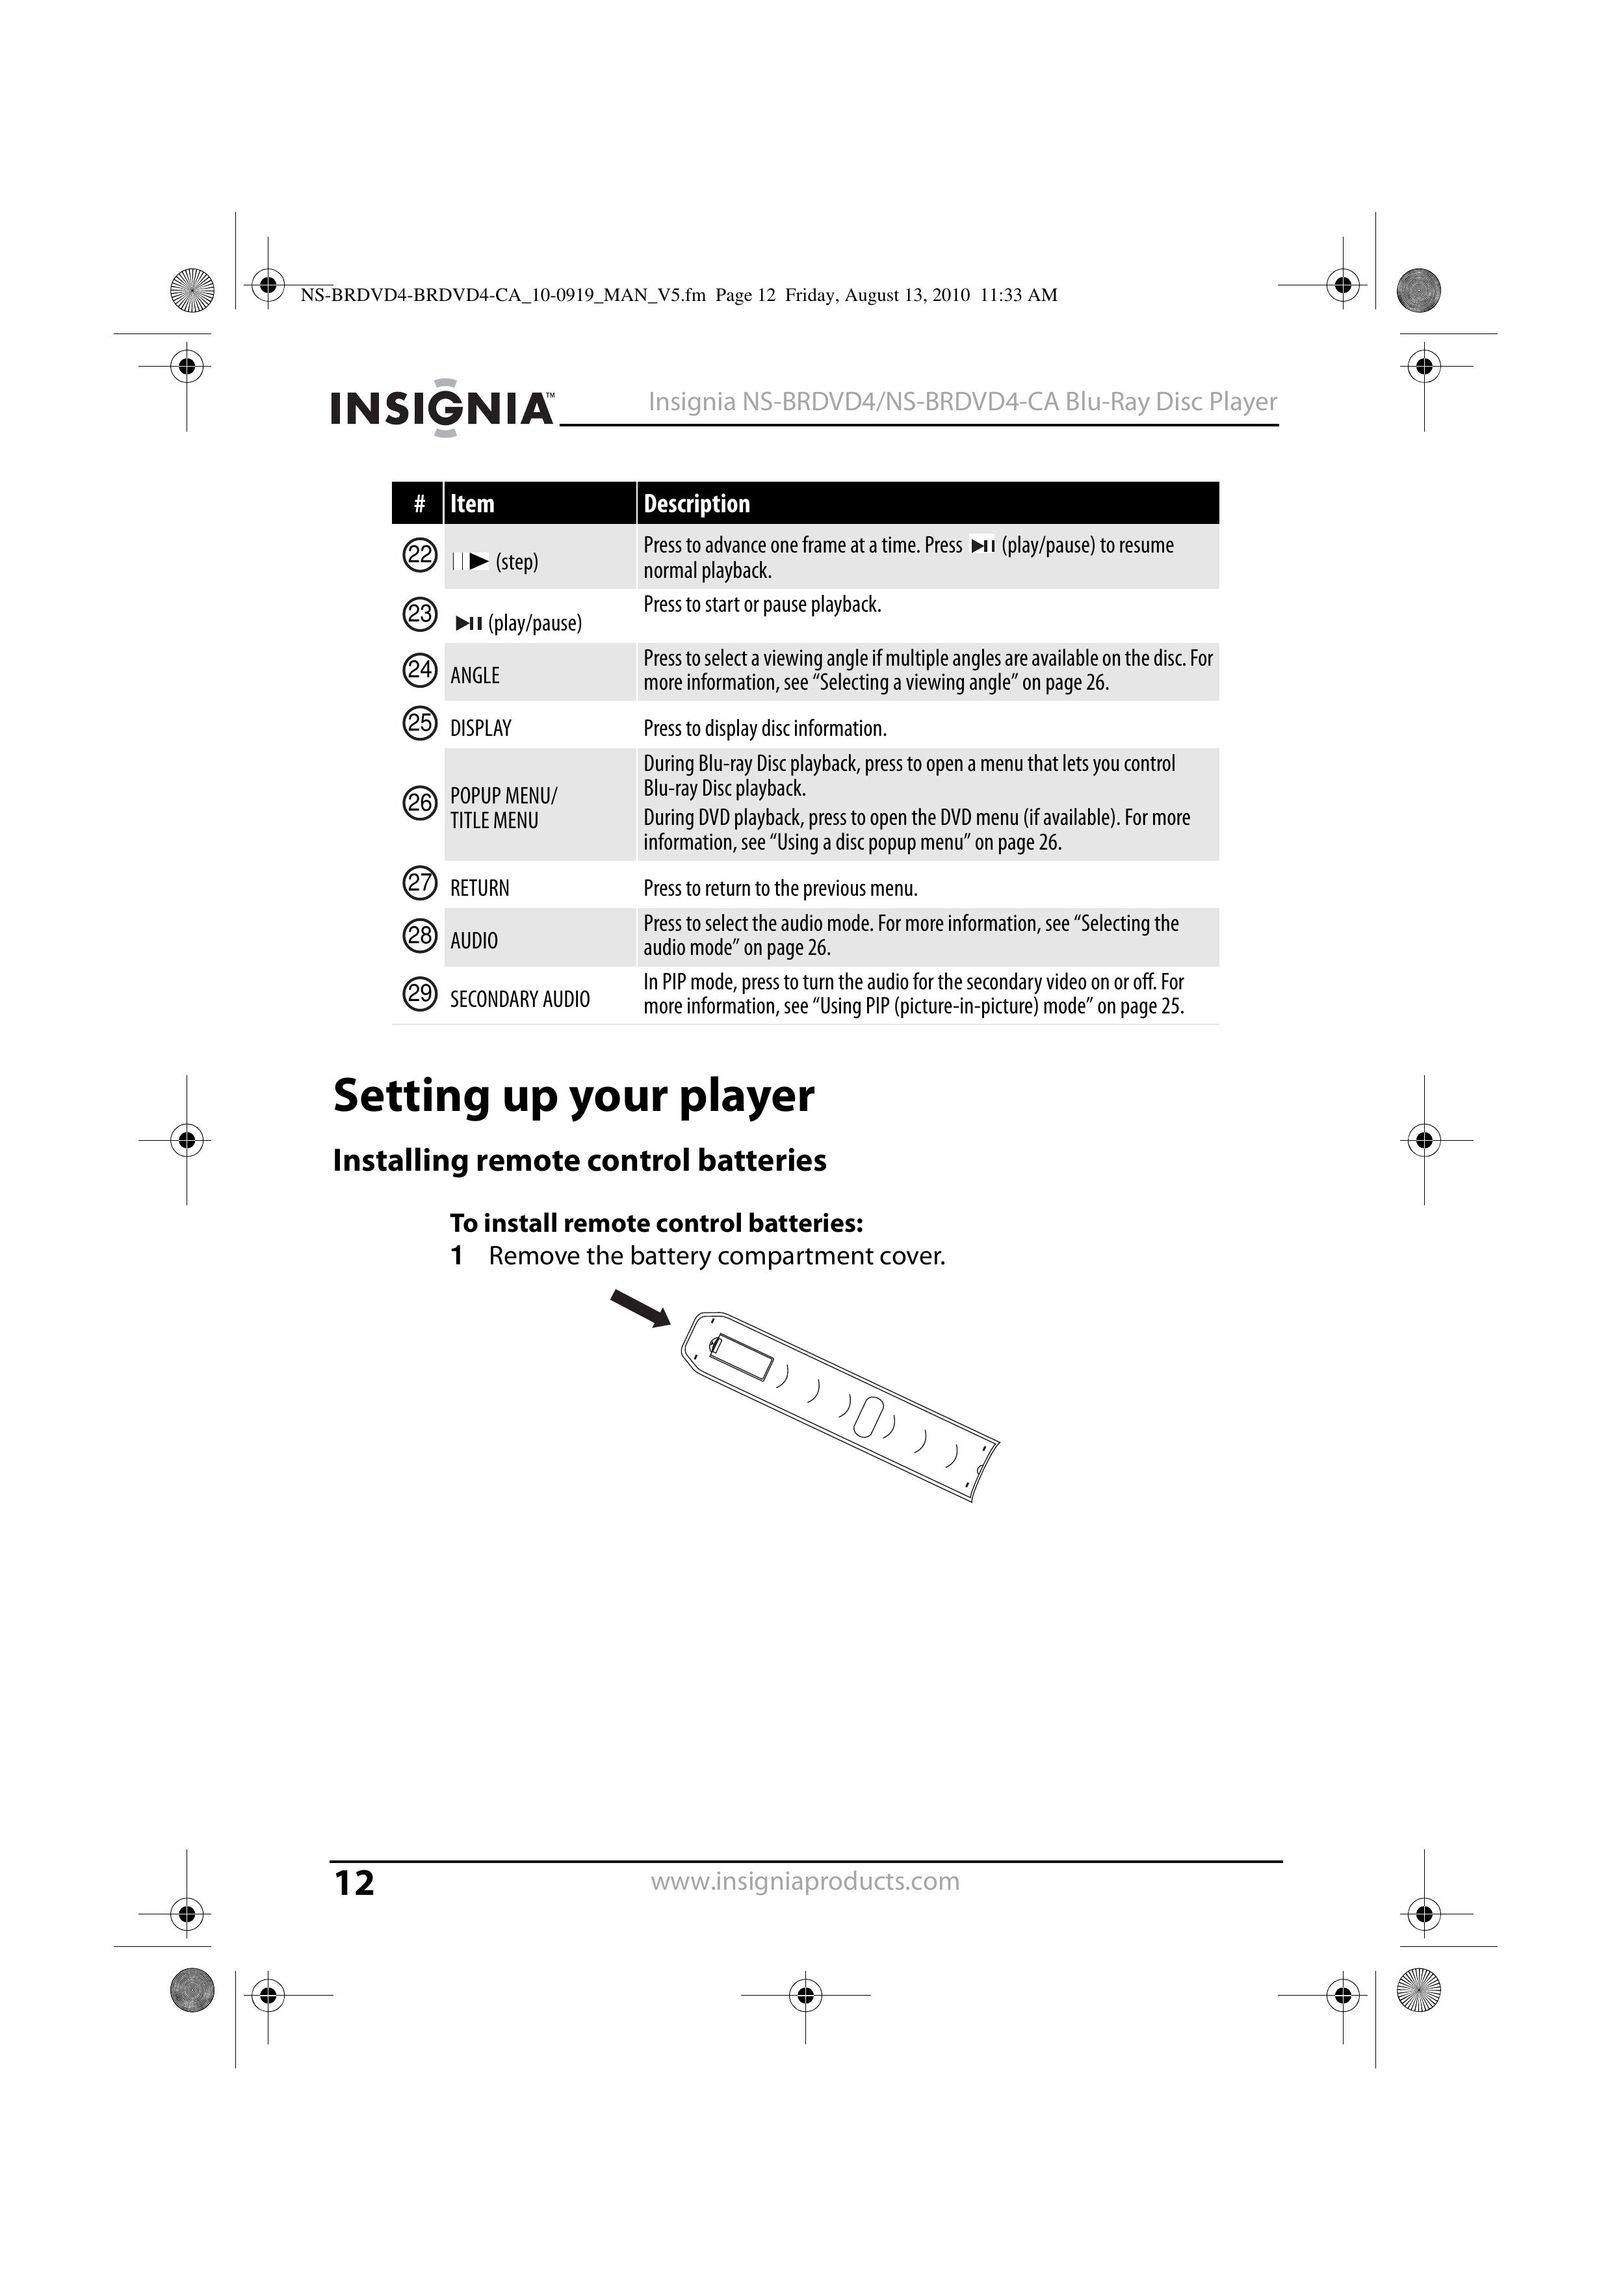 Insignia NS-BRDVD4 Blu-ray Player User Manual (Page 12)